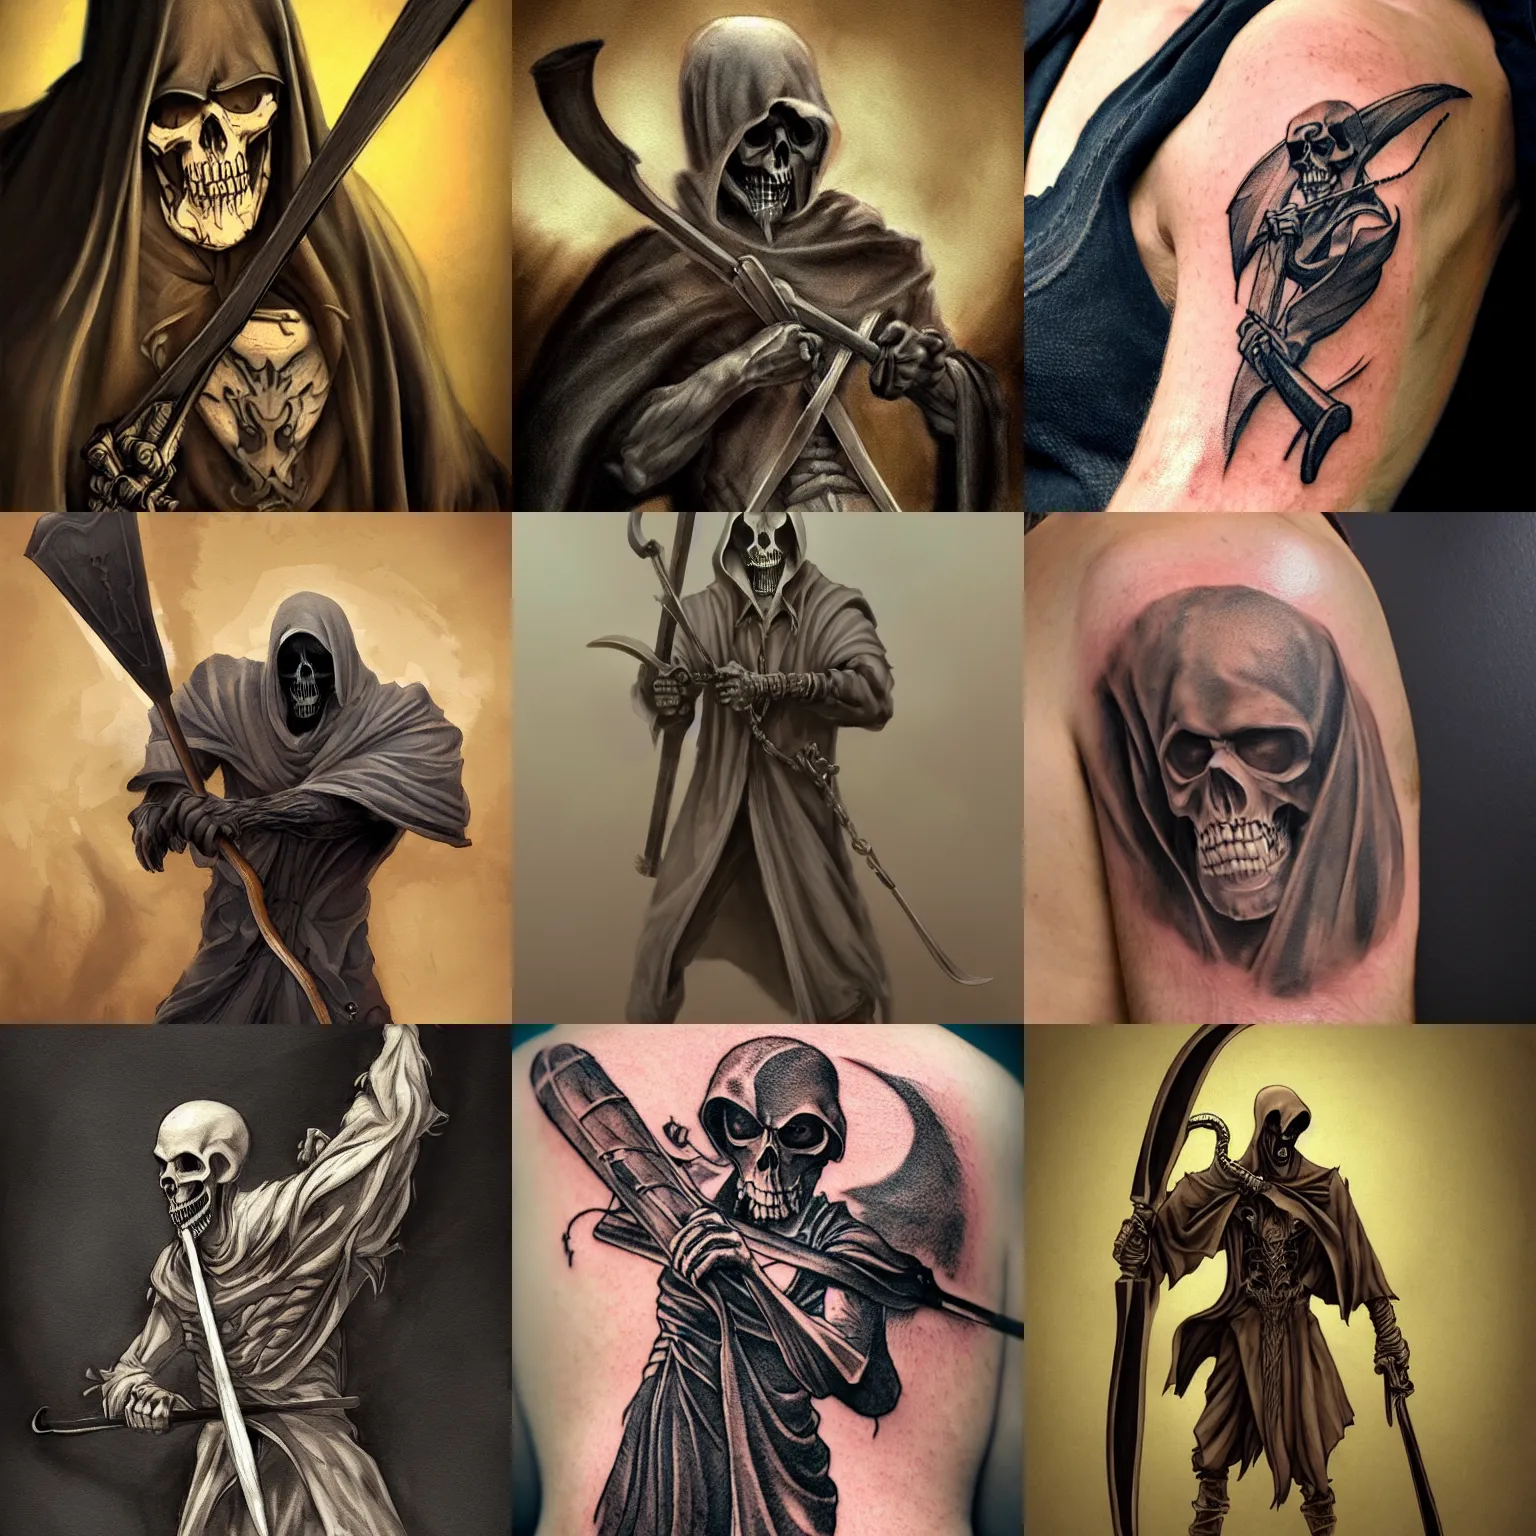 Grim Reaper Temporary Tattoo - 2 skeleton tattoos - Made in the USA | eBay